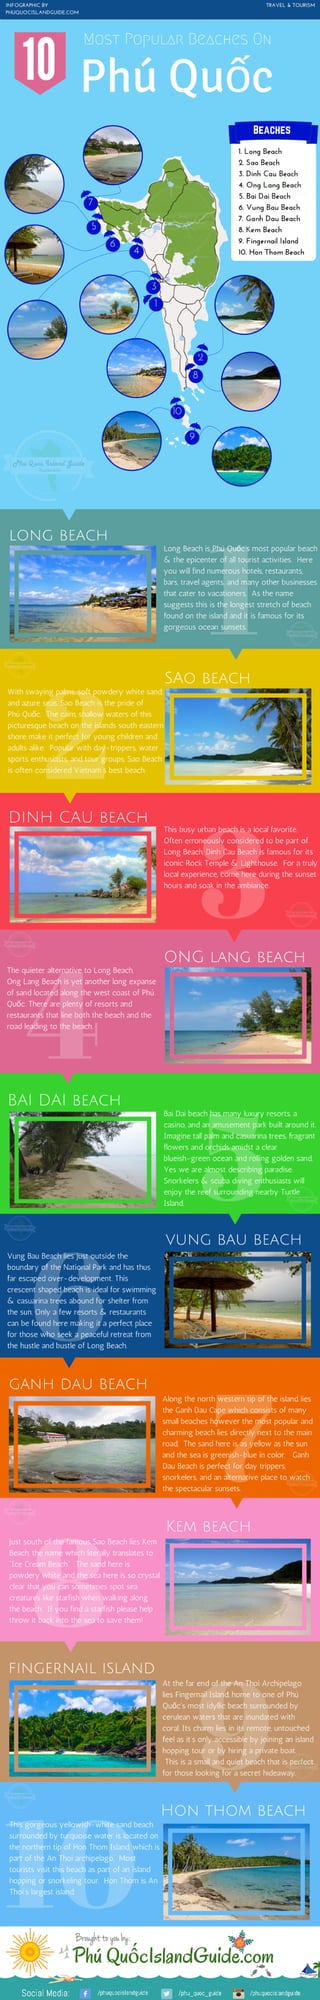 Phu Quoc Beaches [INFOGRAPHIC}